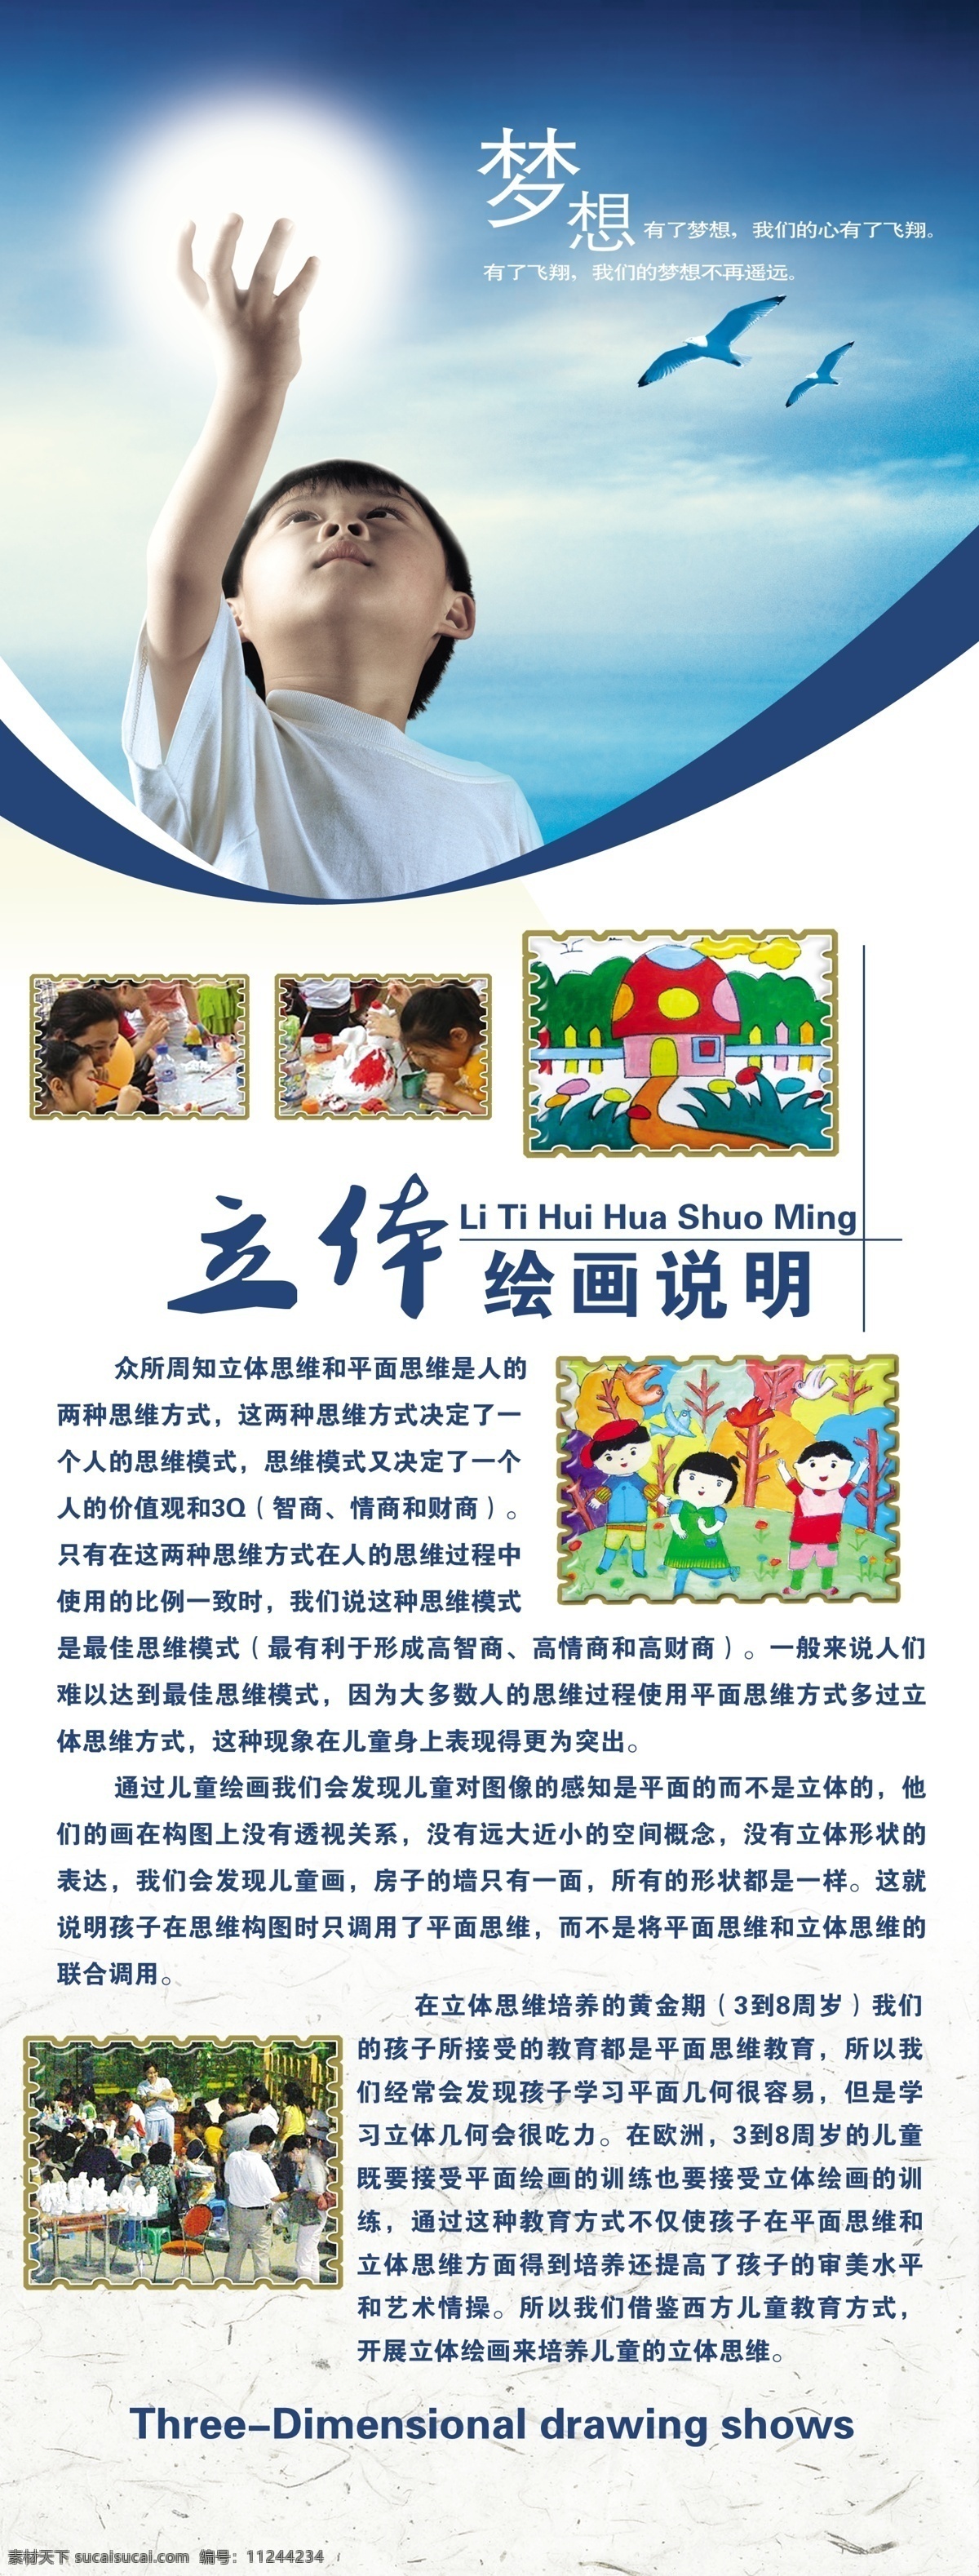 x展架 x 展架 模板下载 儿童 广告设计模板 海鸥 绘画 向往 华夏 人寿保险 公司 新项目 孩子保险 保险行业展架 期望 展板模板 源文件 x展板设计